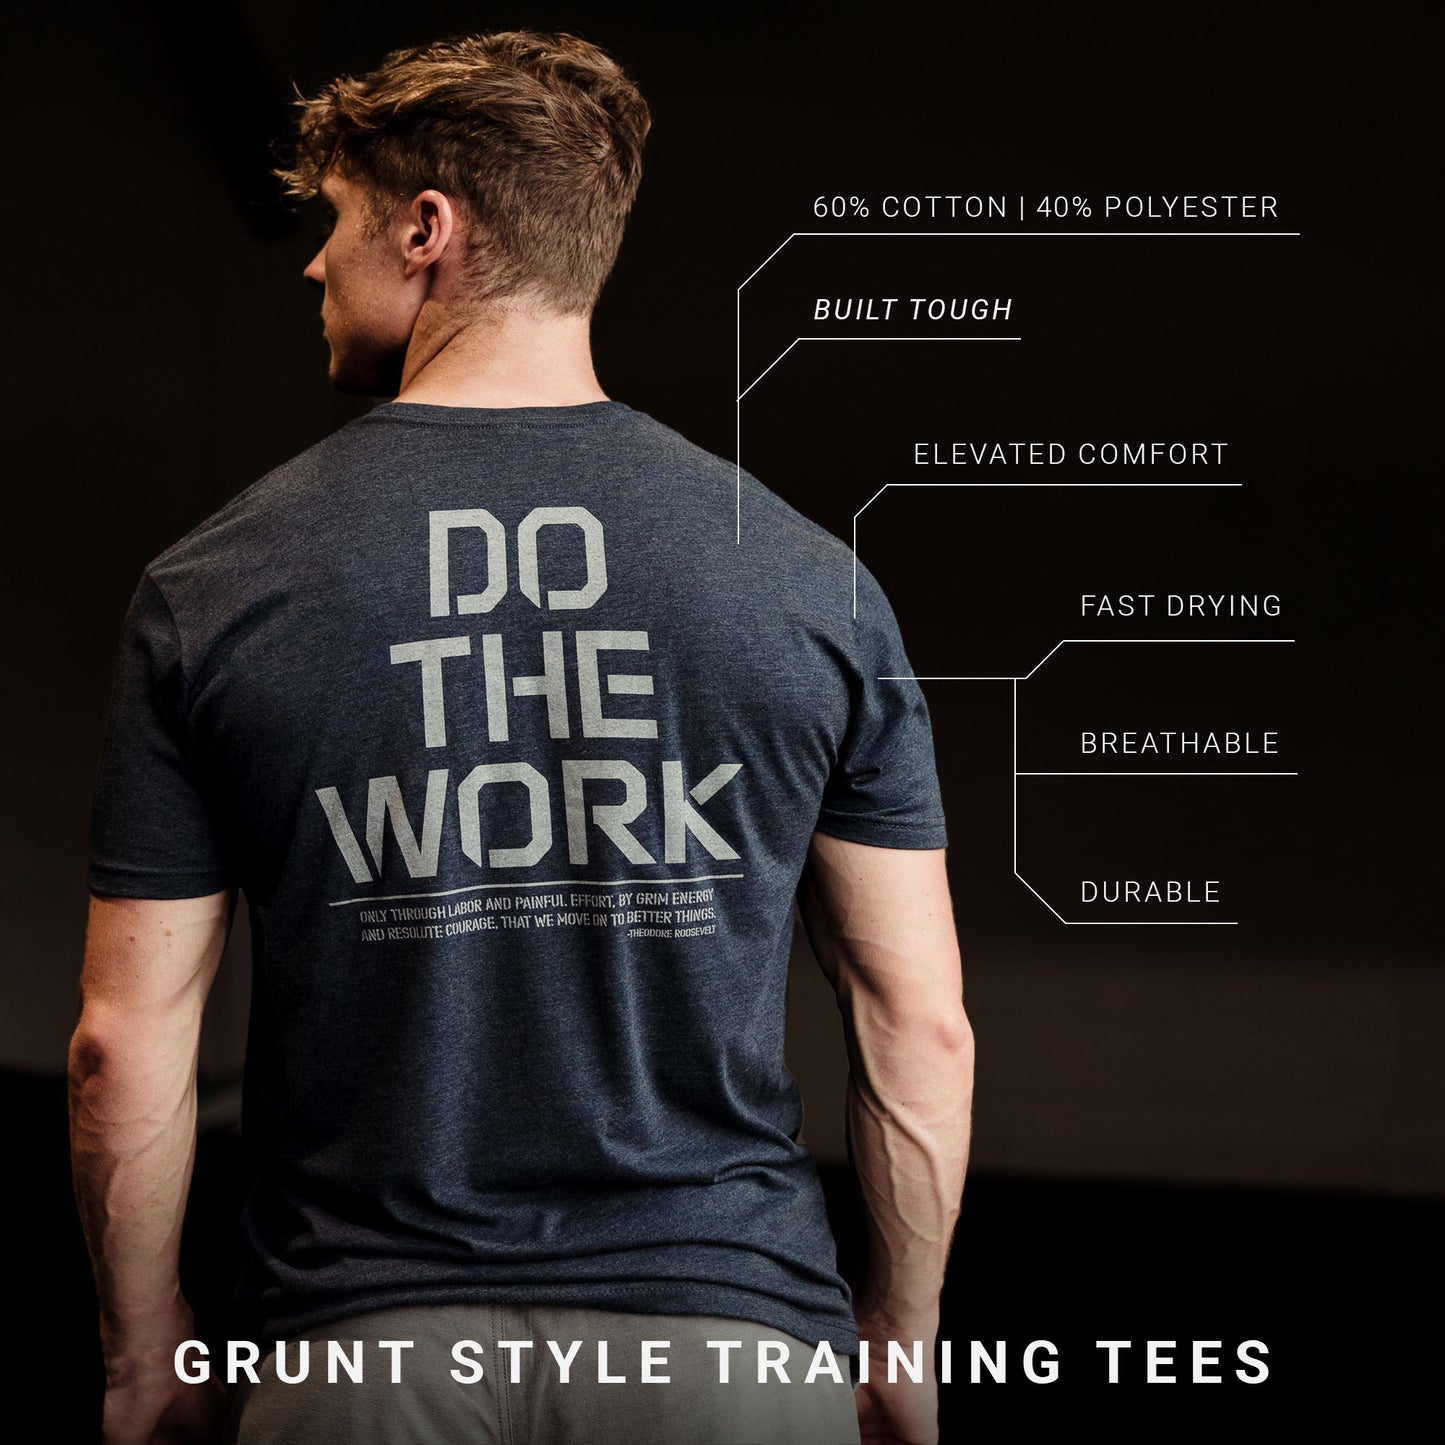 Do the Work Shirt Info | Grunt Style